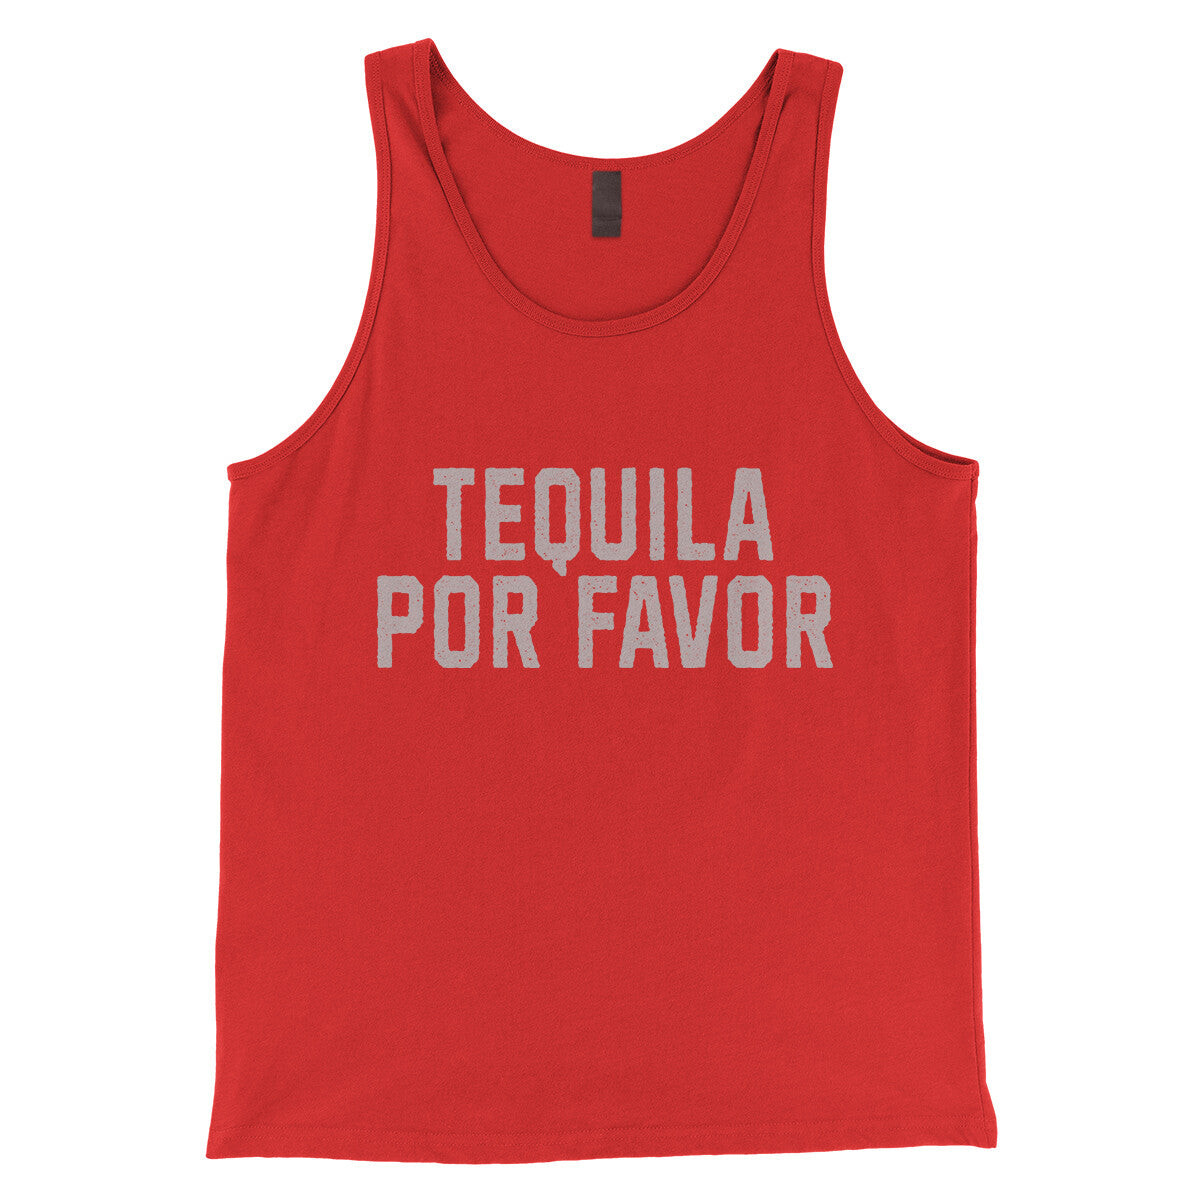 Tequila Por Favor in Red Color